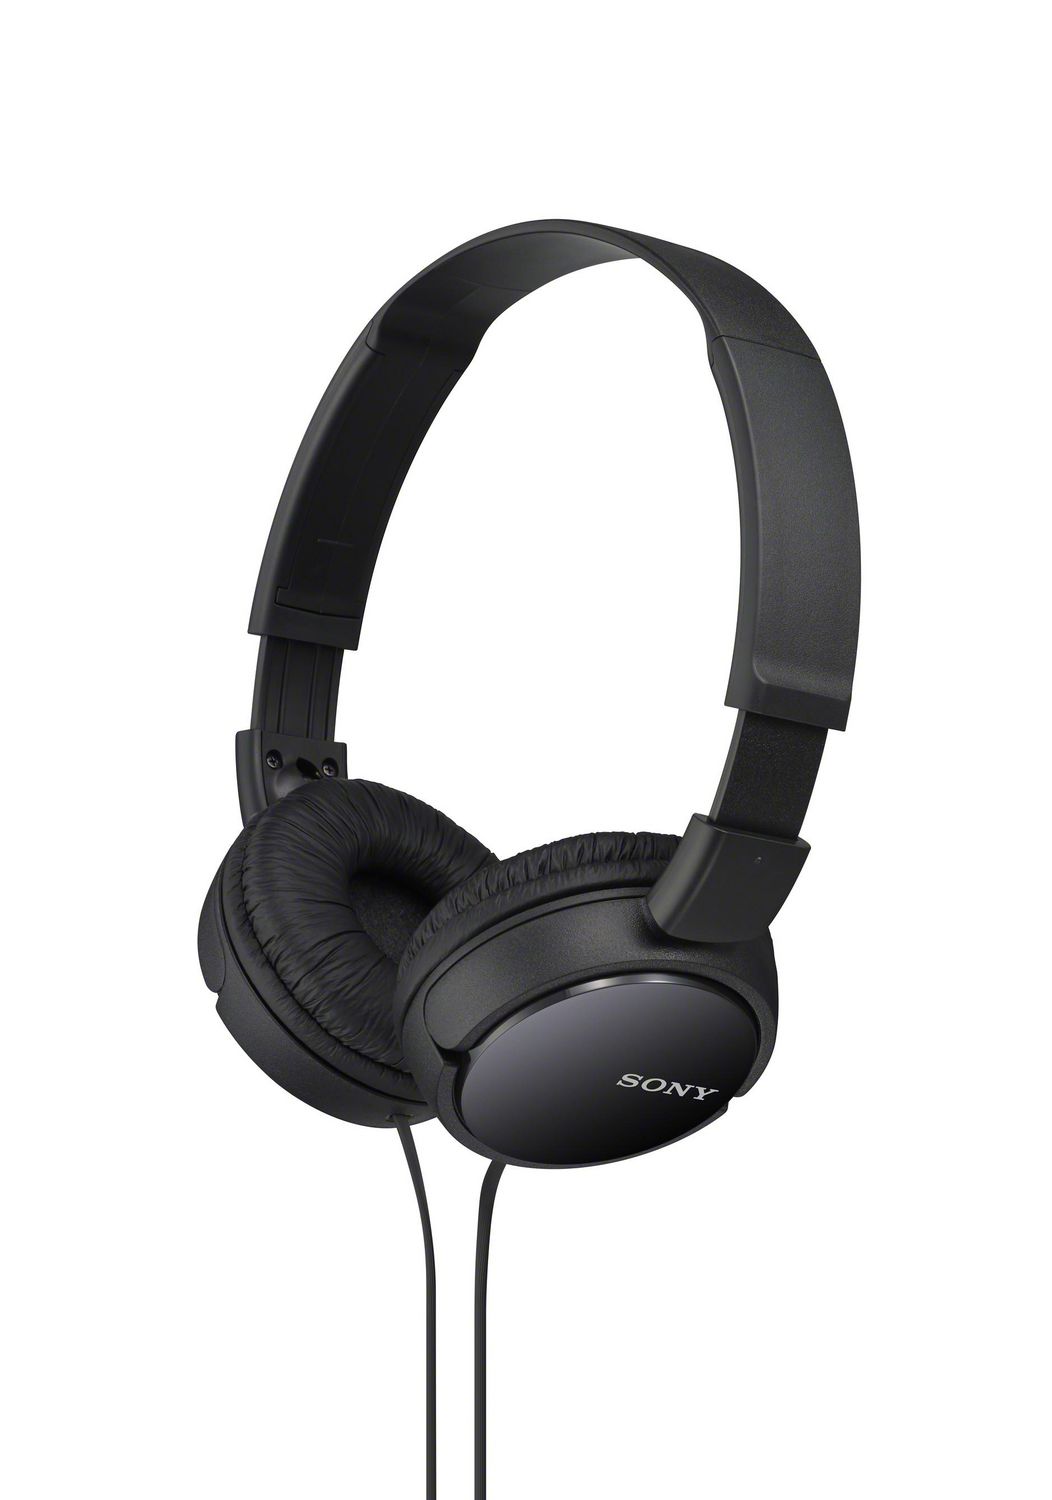 SONY Zx Series Stereo Over-Ear Headphones, ZX110 Headphones 